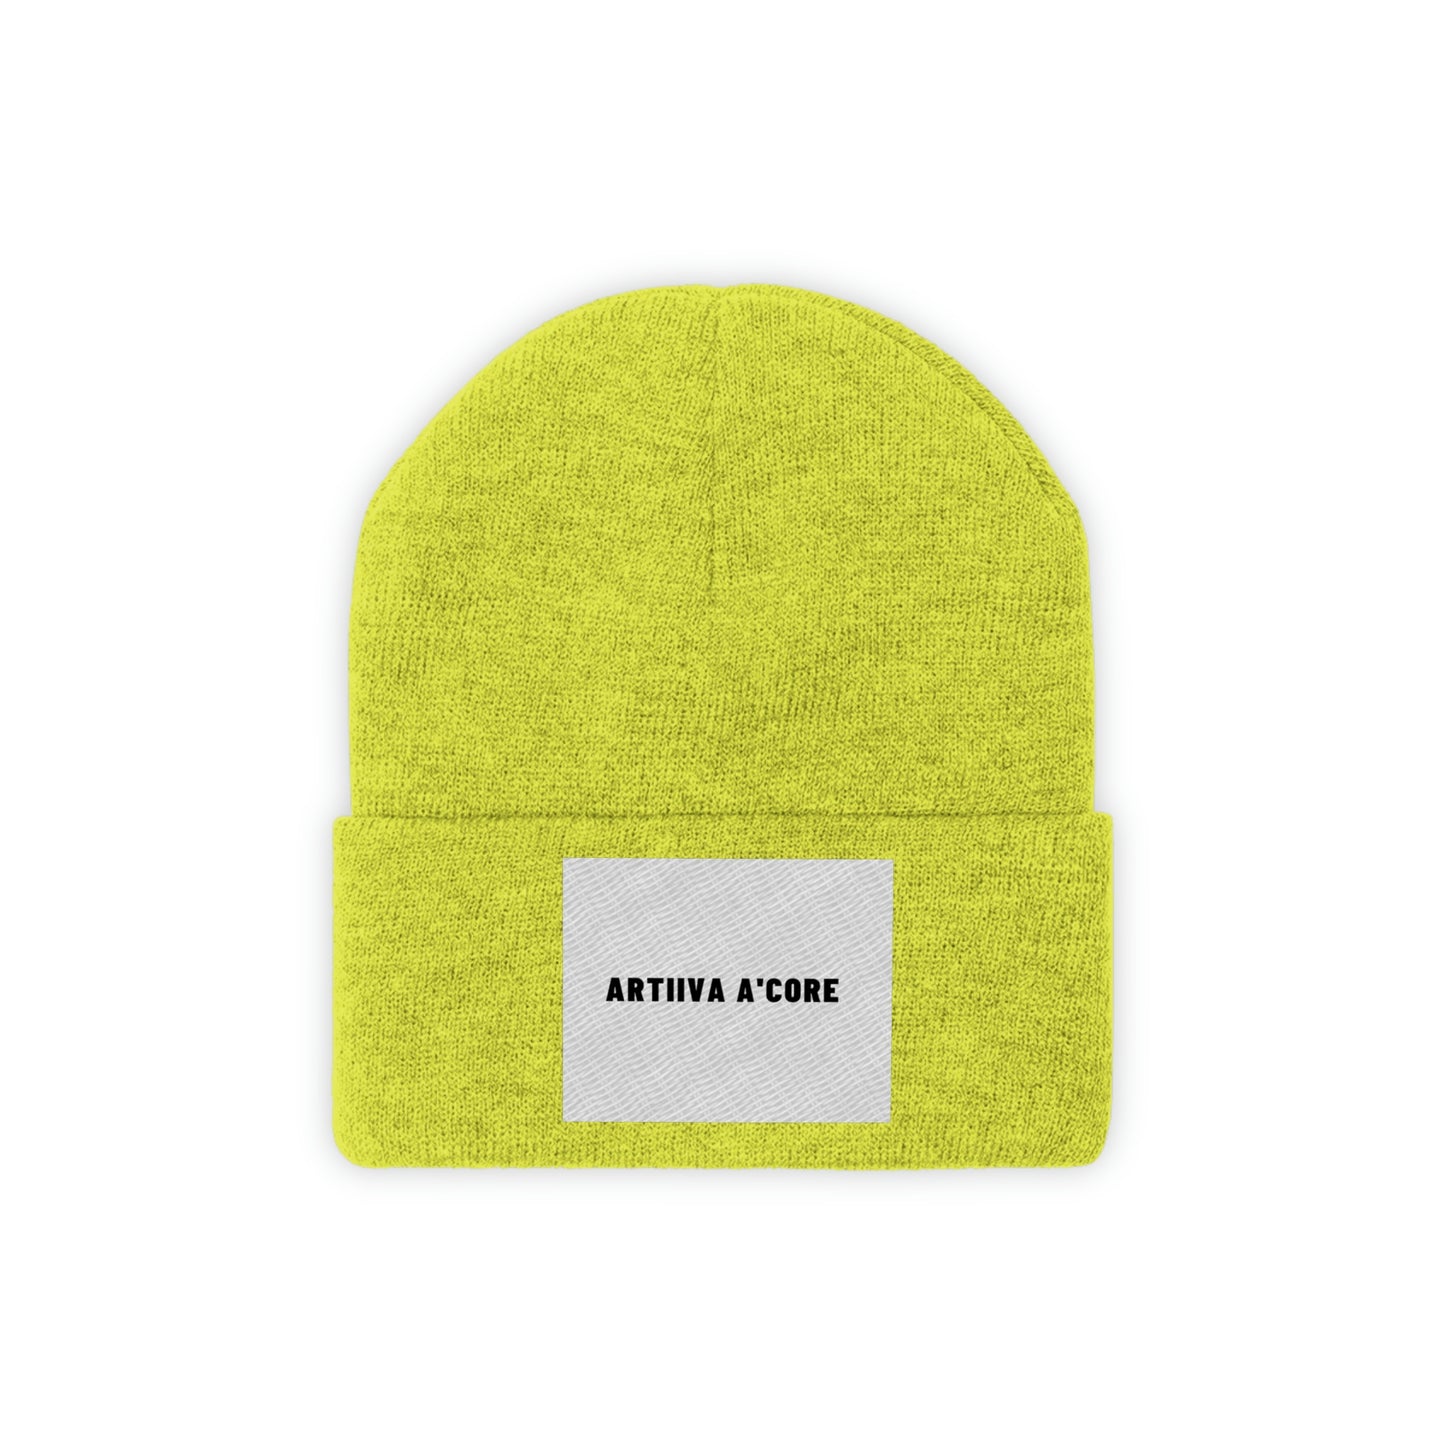 Artiiva A'core Knit Beanie - Neon Yellow